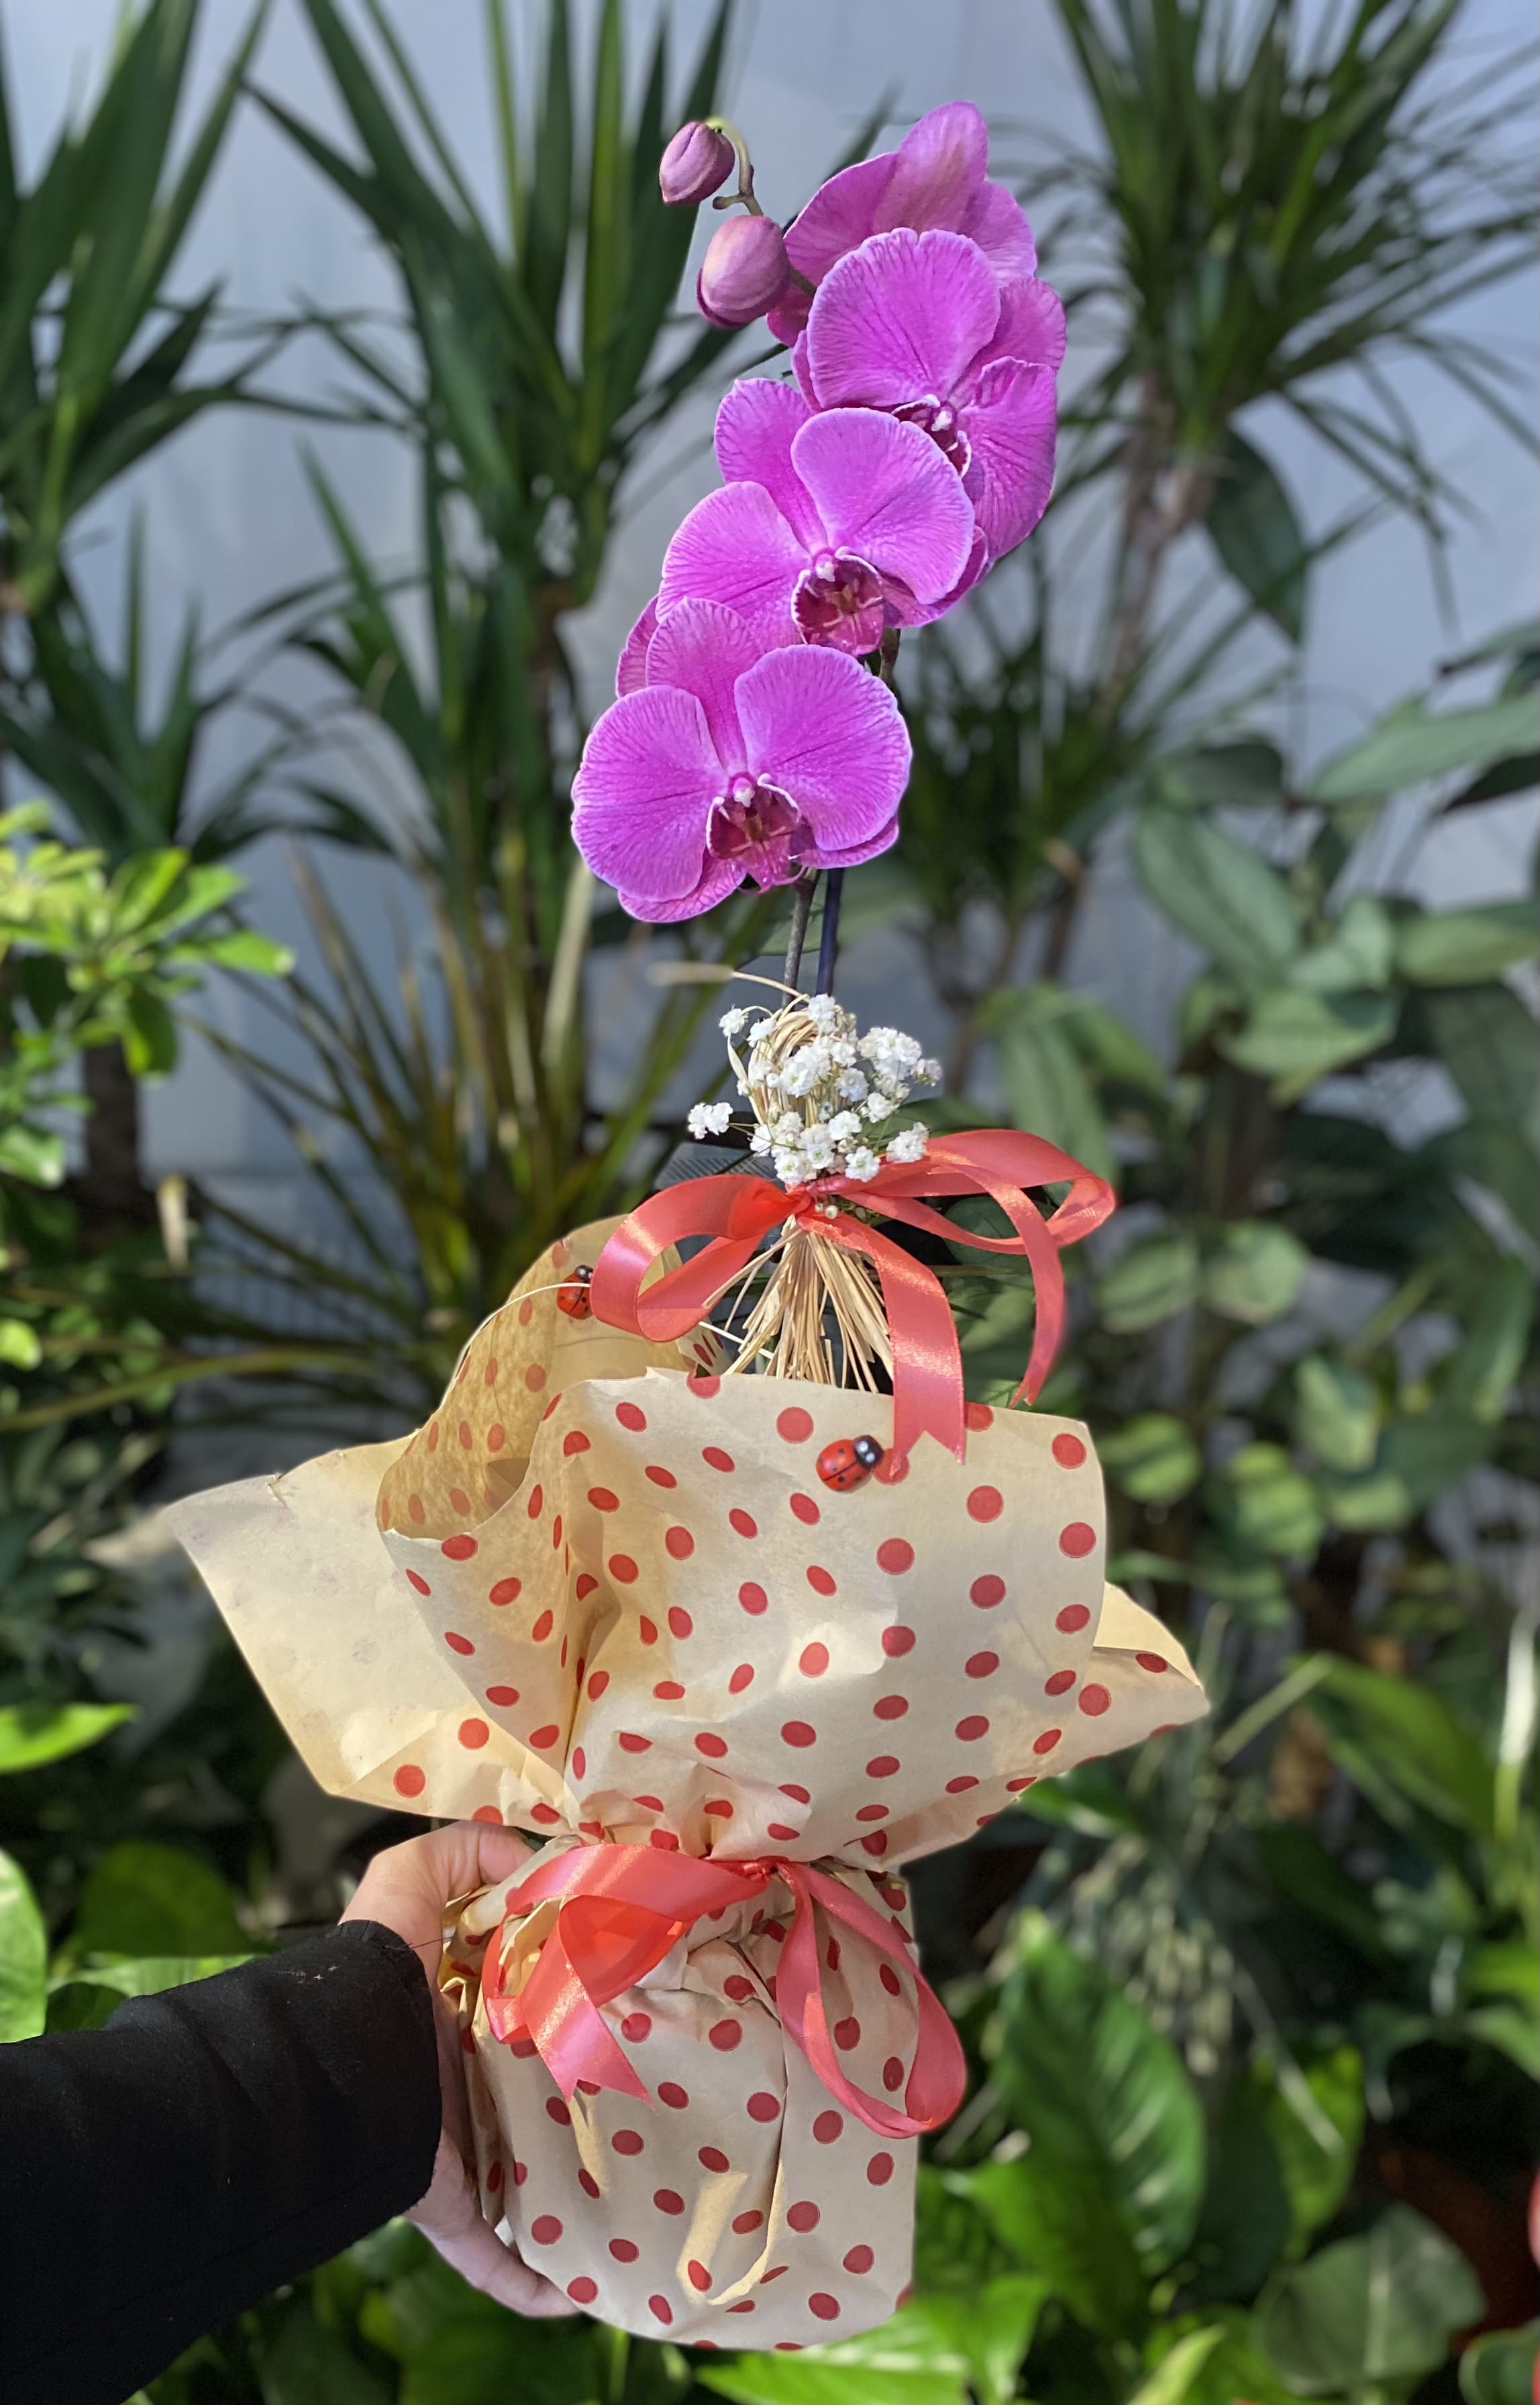 butik-suslemeli-orkide